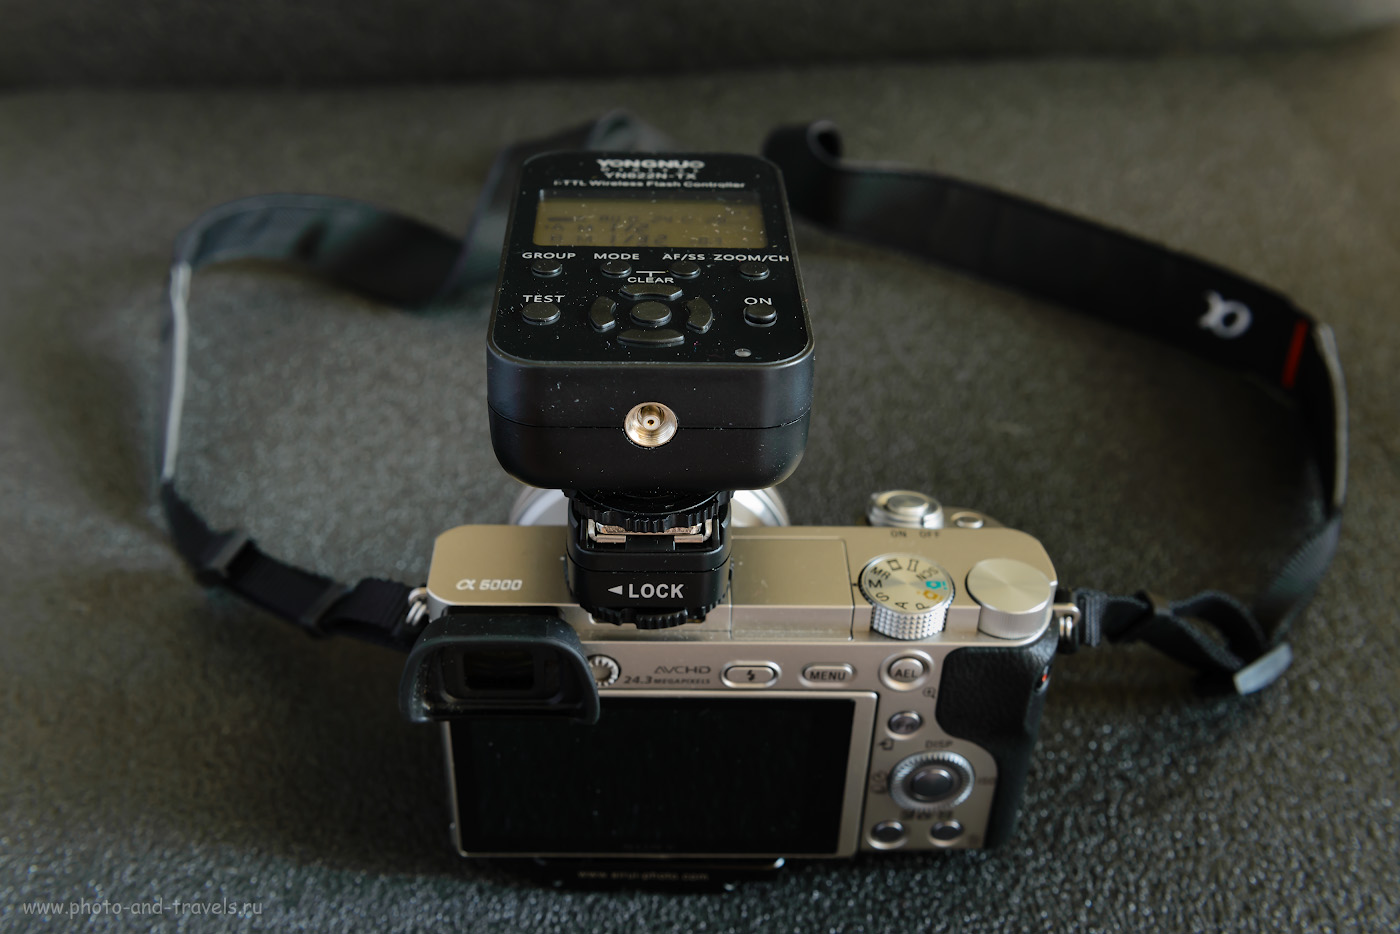 Фотография 3. Так выглядит камера Sony A6000 с радиосинхронизатором Yongnuo YN-622N-TX.